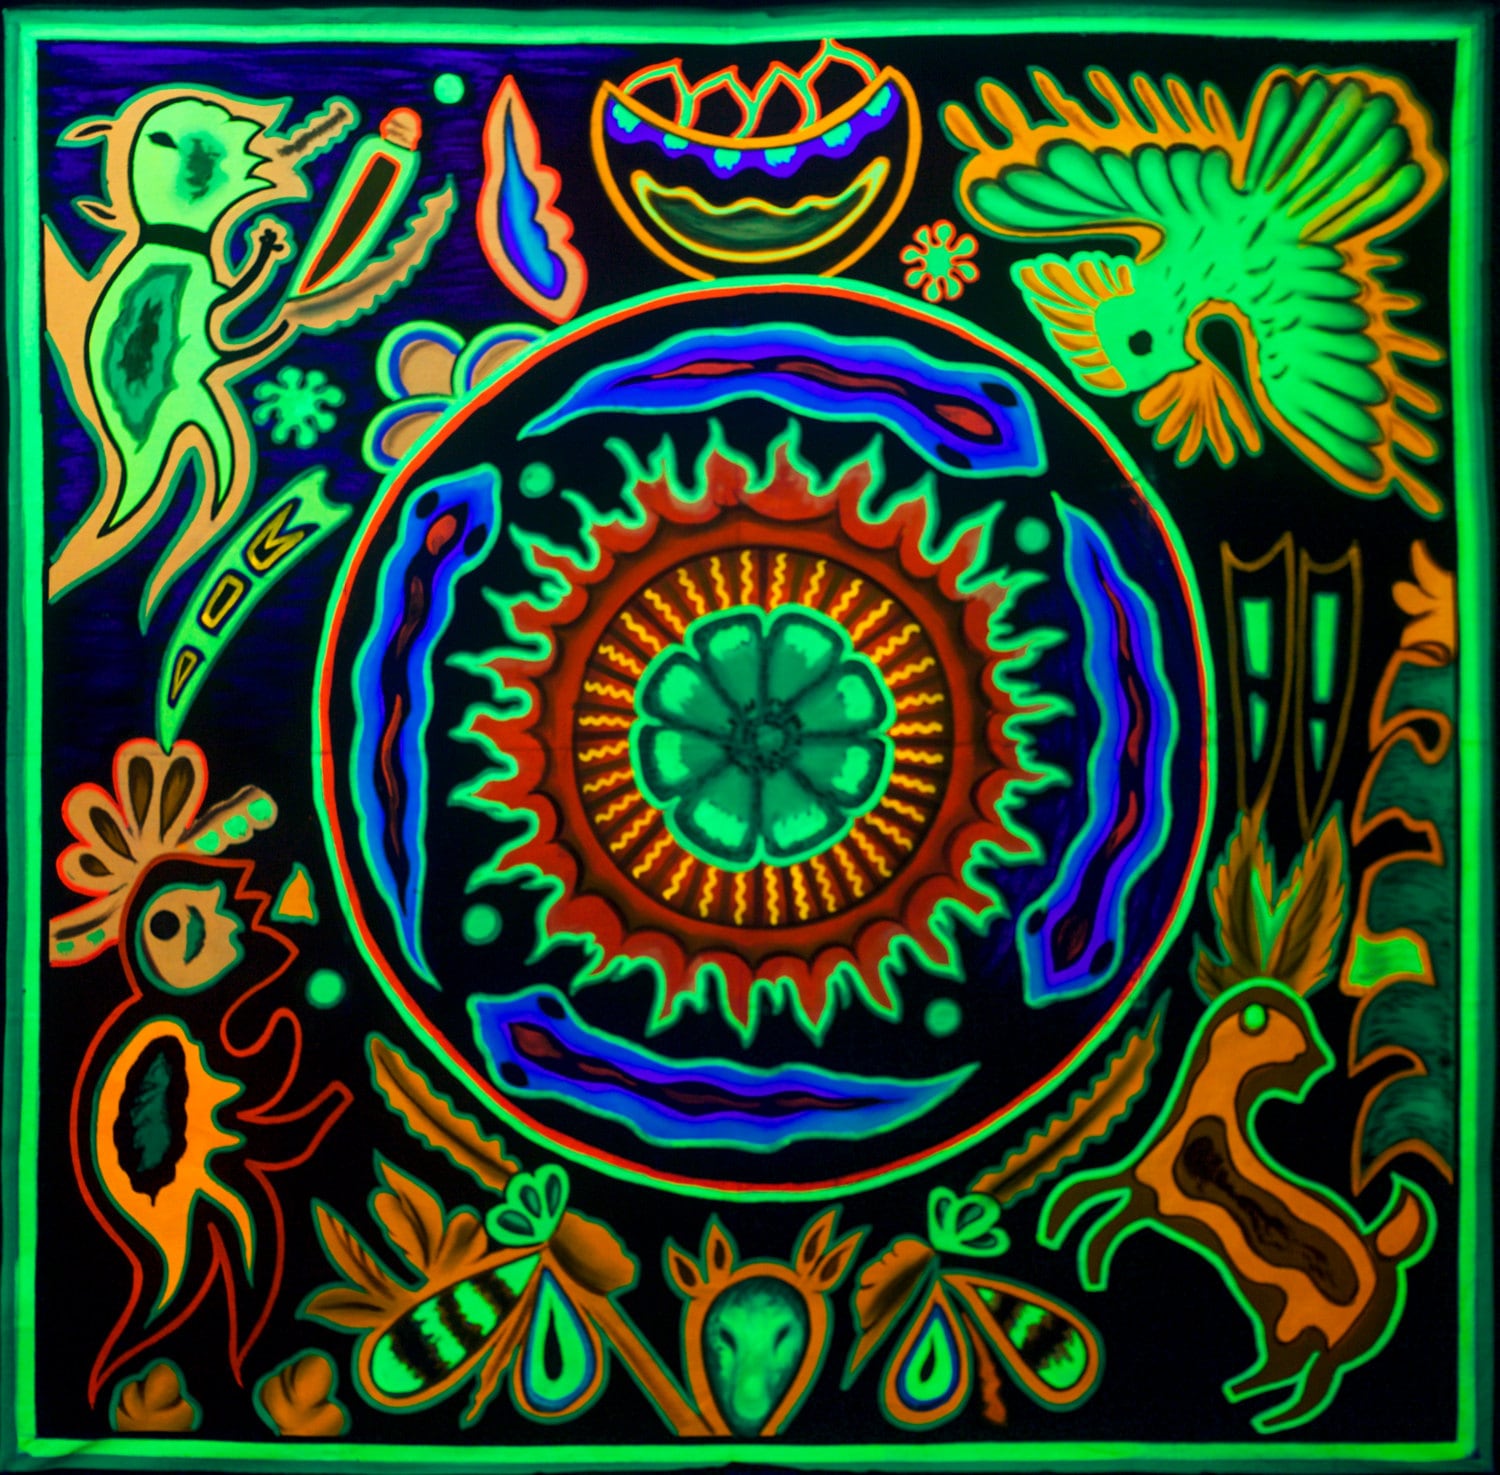 Huichol Peyote Mandala UV Painting - 100x100cm - painted on order - fully blacklight glowing colors - peyote visionary artwork